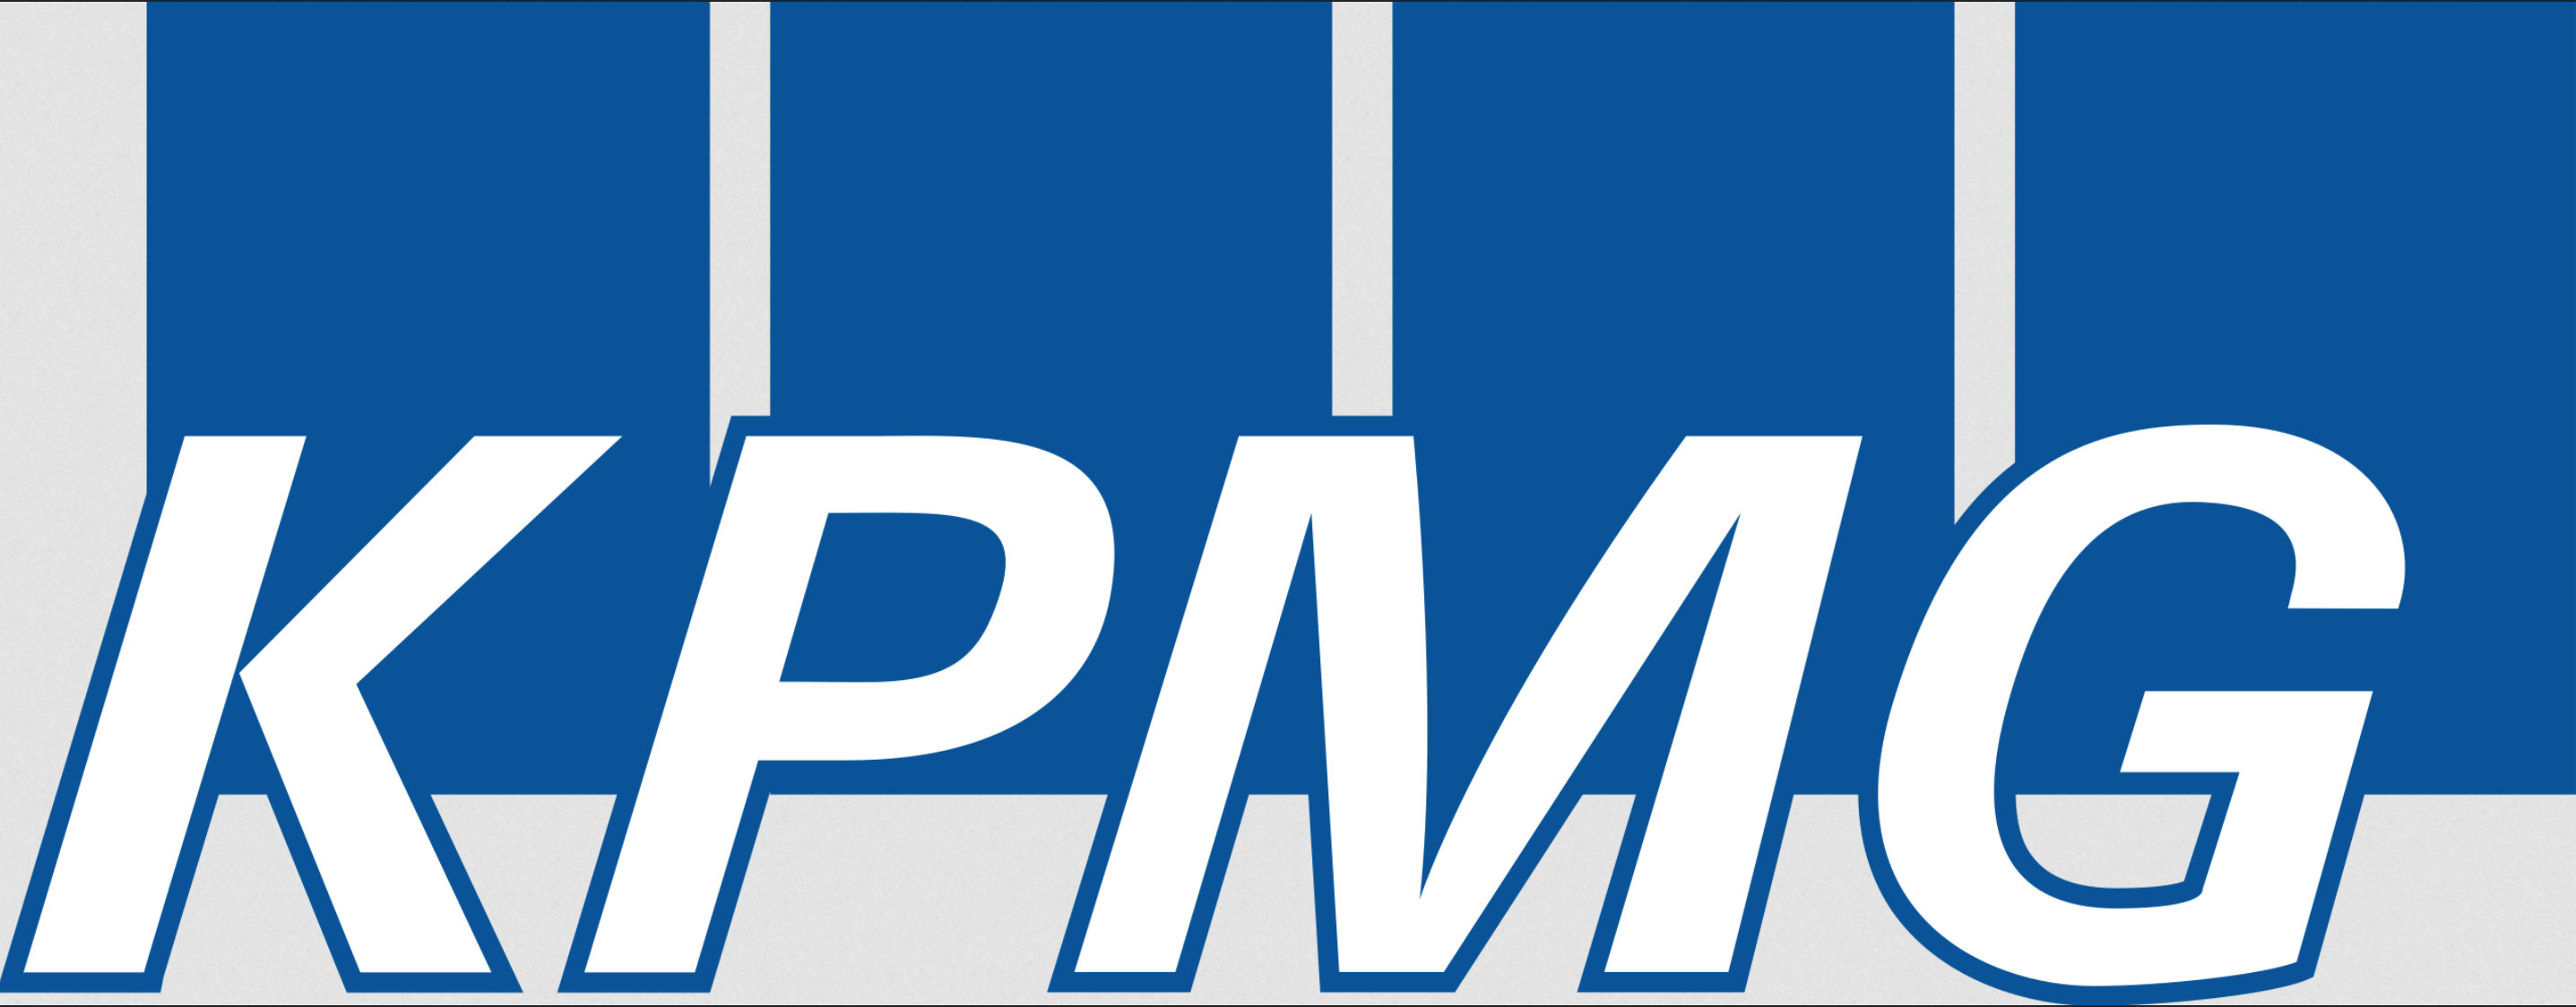 Graduate Auditors – Jump-start your Audit career at KPMG